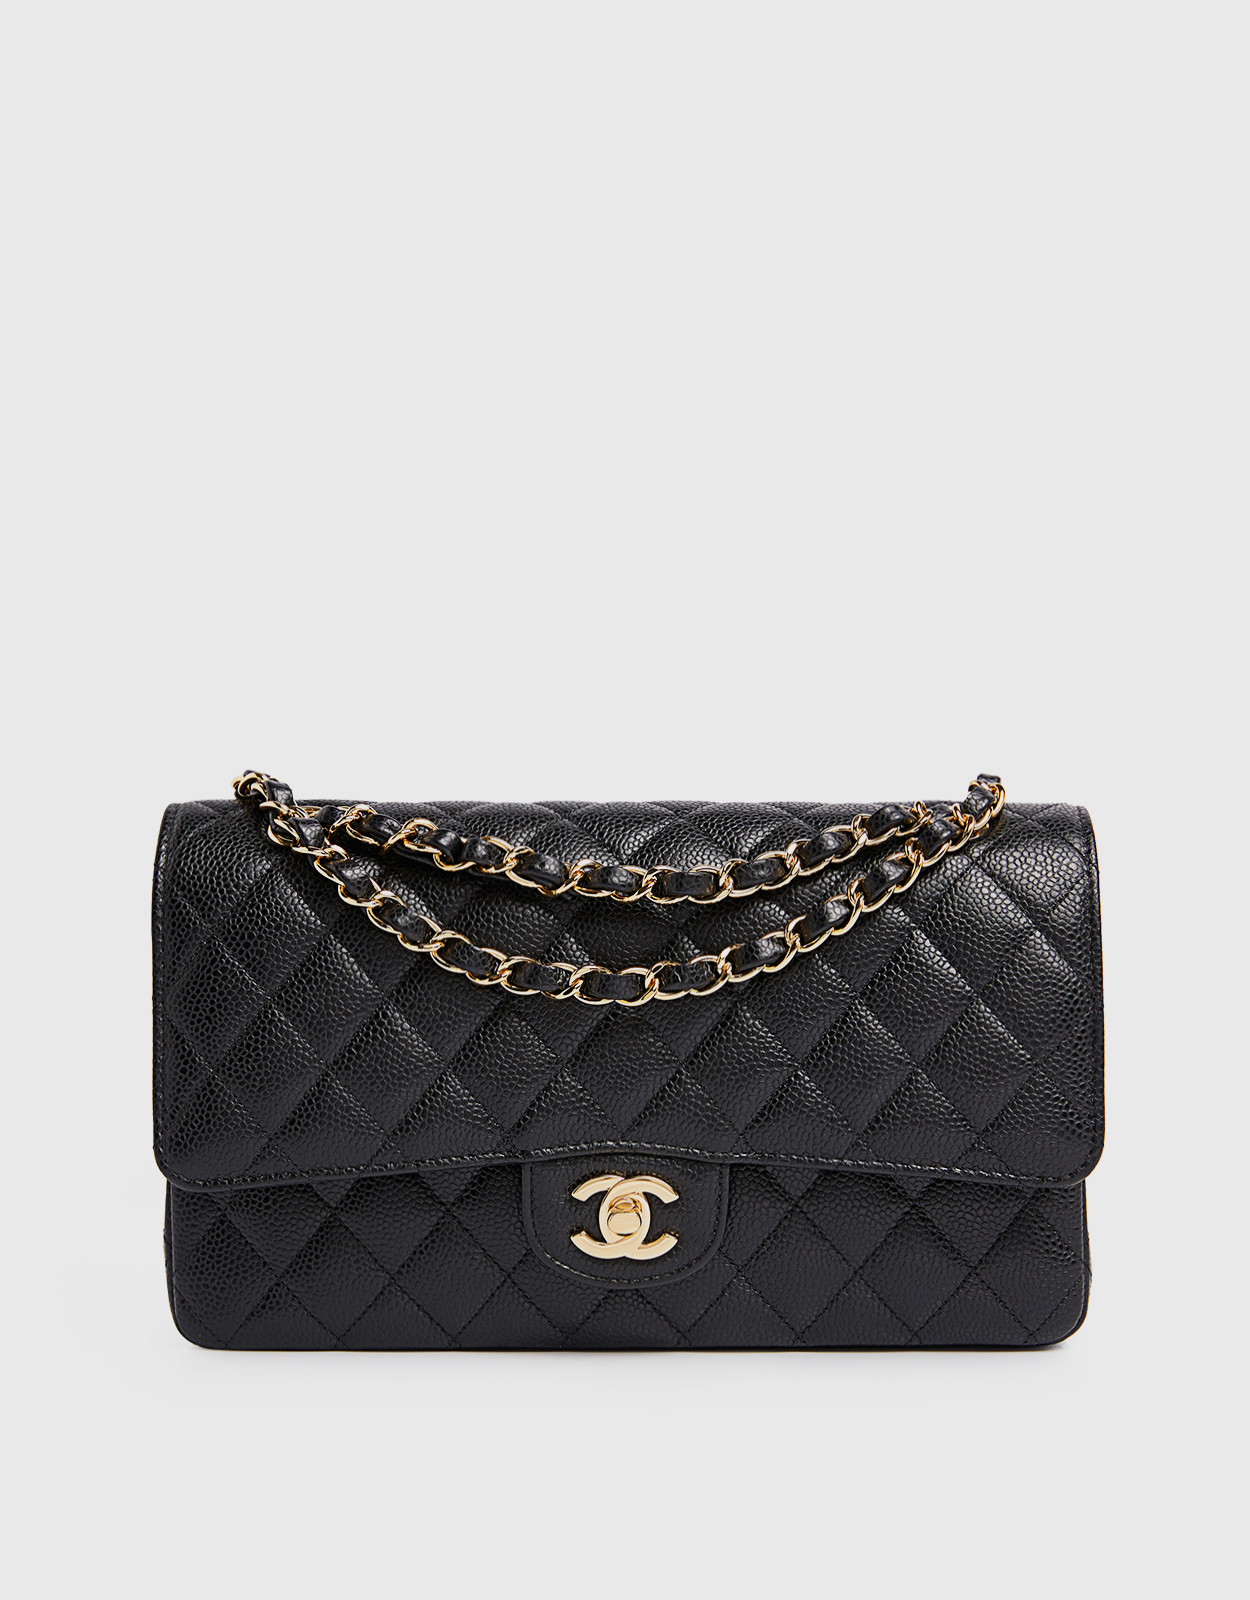 Chanel Classic Handbag 23 Caviar Calfskin Gold-Tone Metal Shoulder Bag (Shoulder bags,Chain Strap) IFCHIC.COM